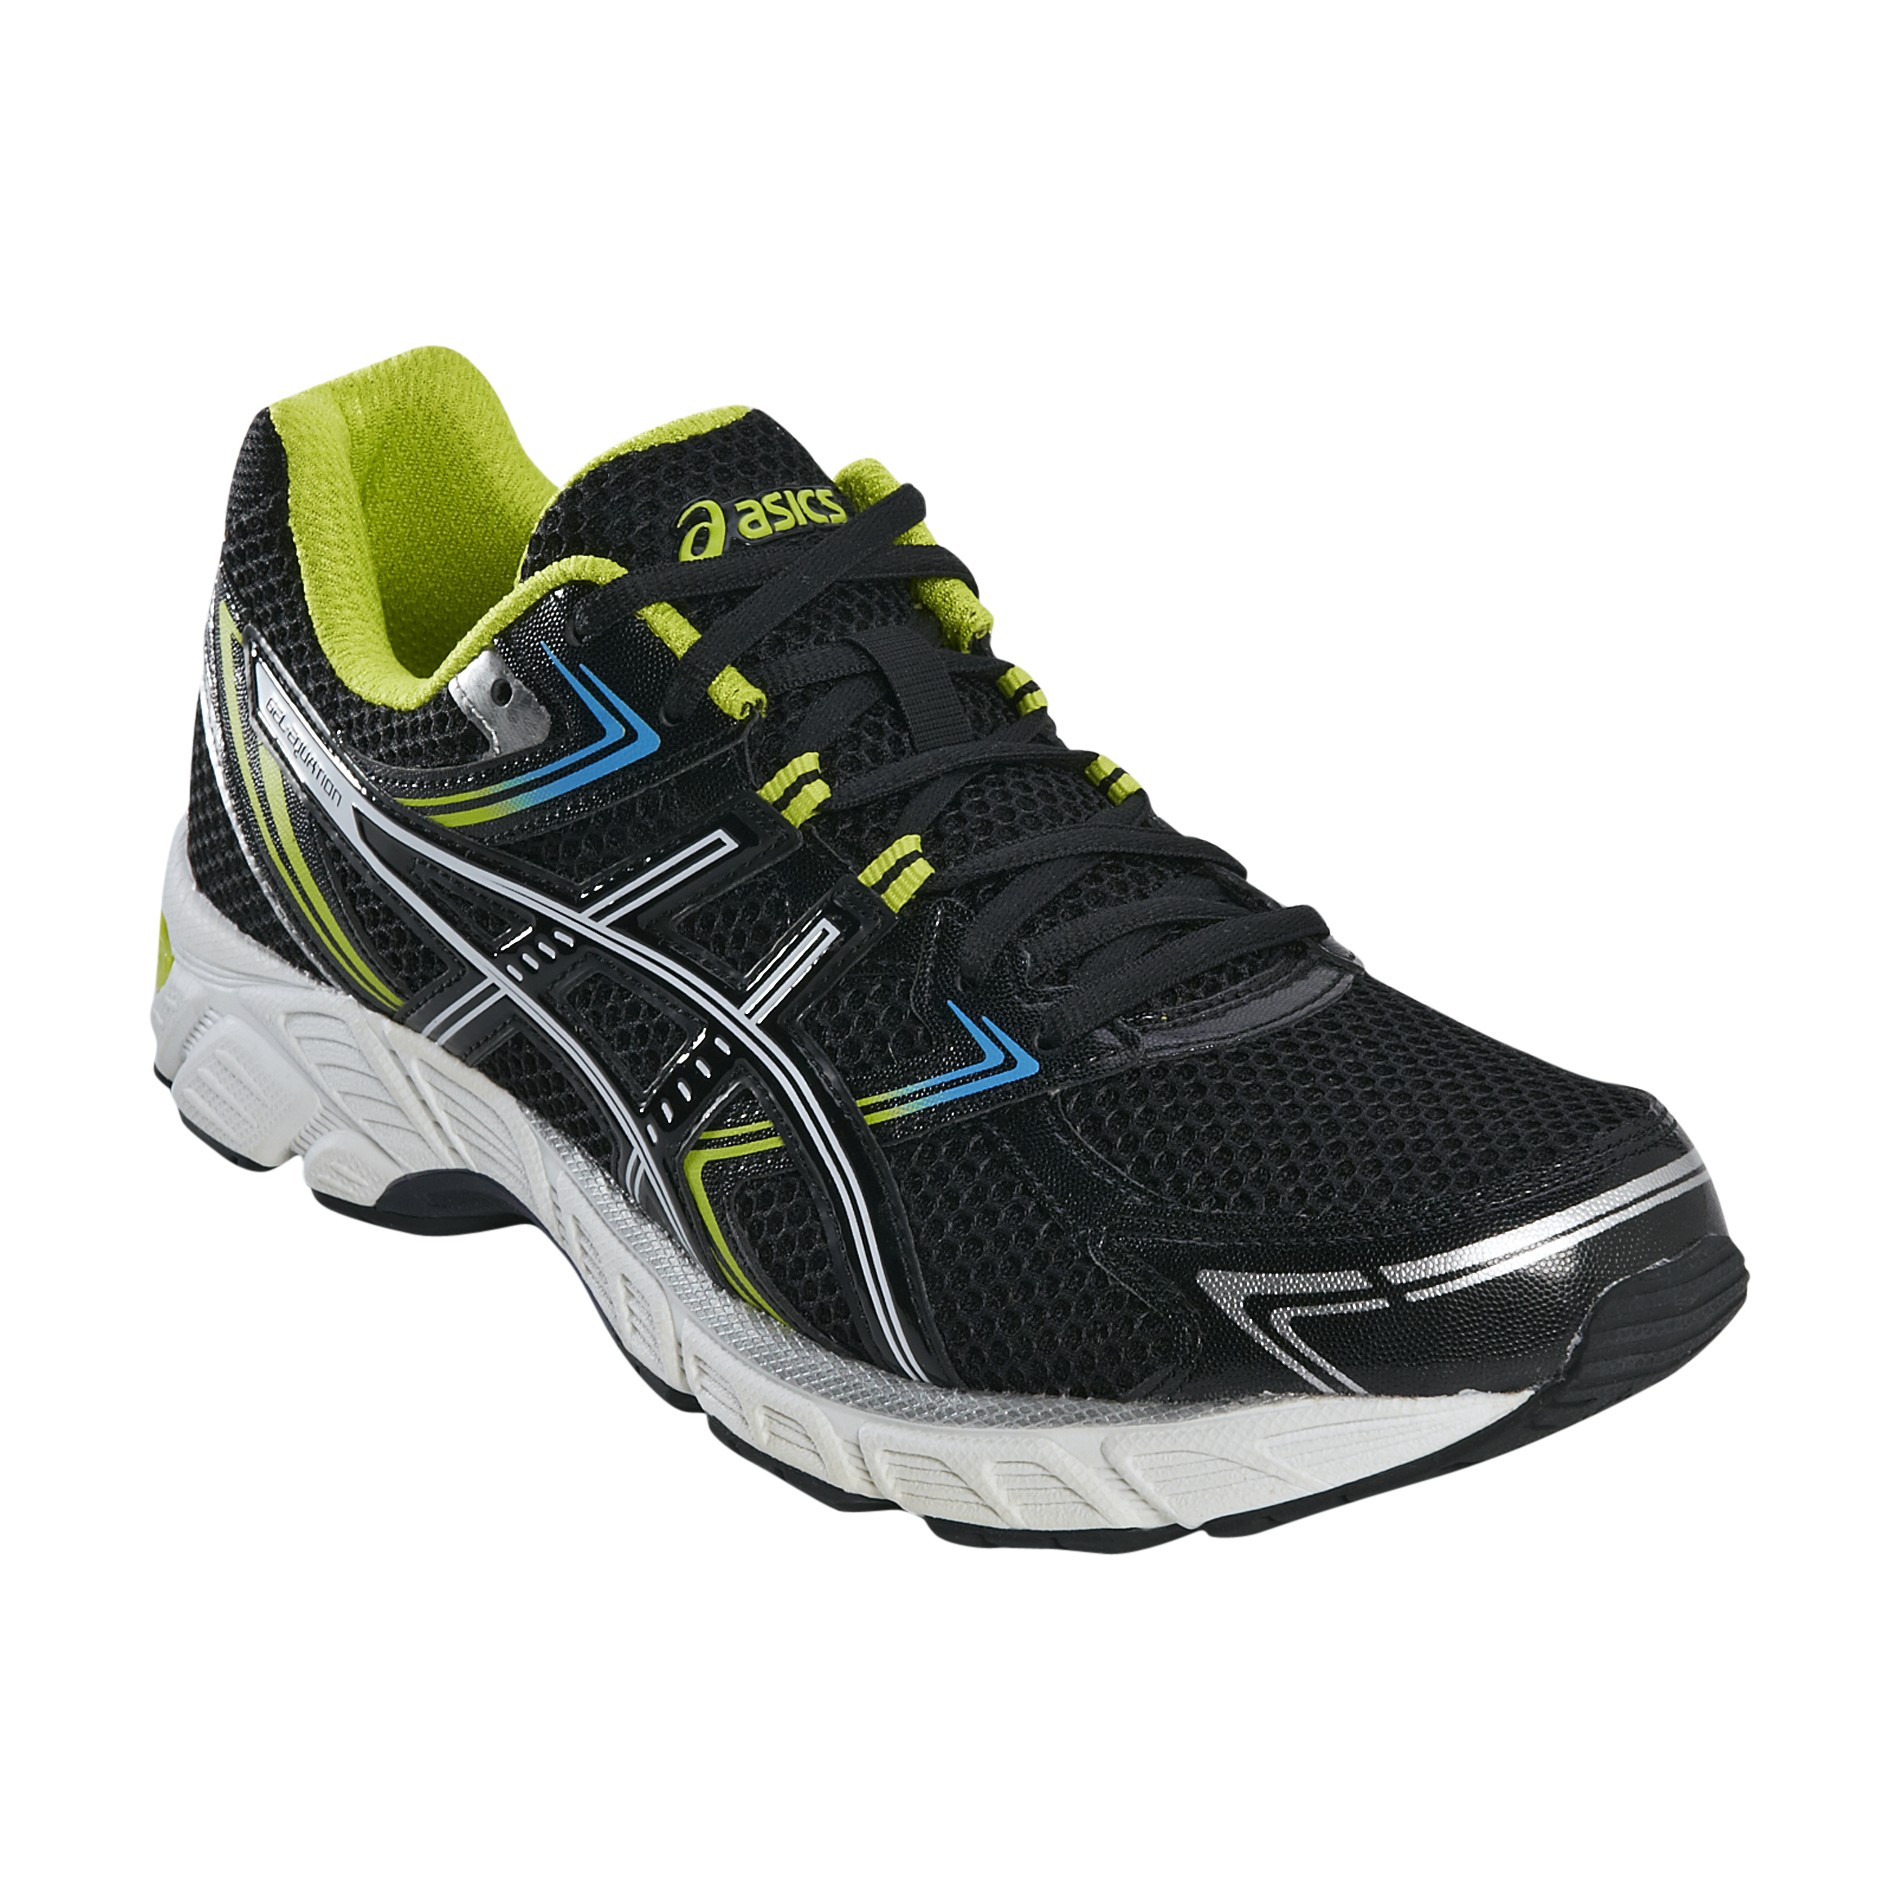 ASICS Men's GEL-Equation Running Athletic Shoe - Black/Lime